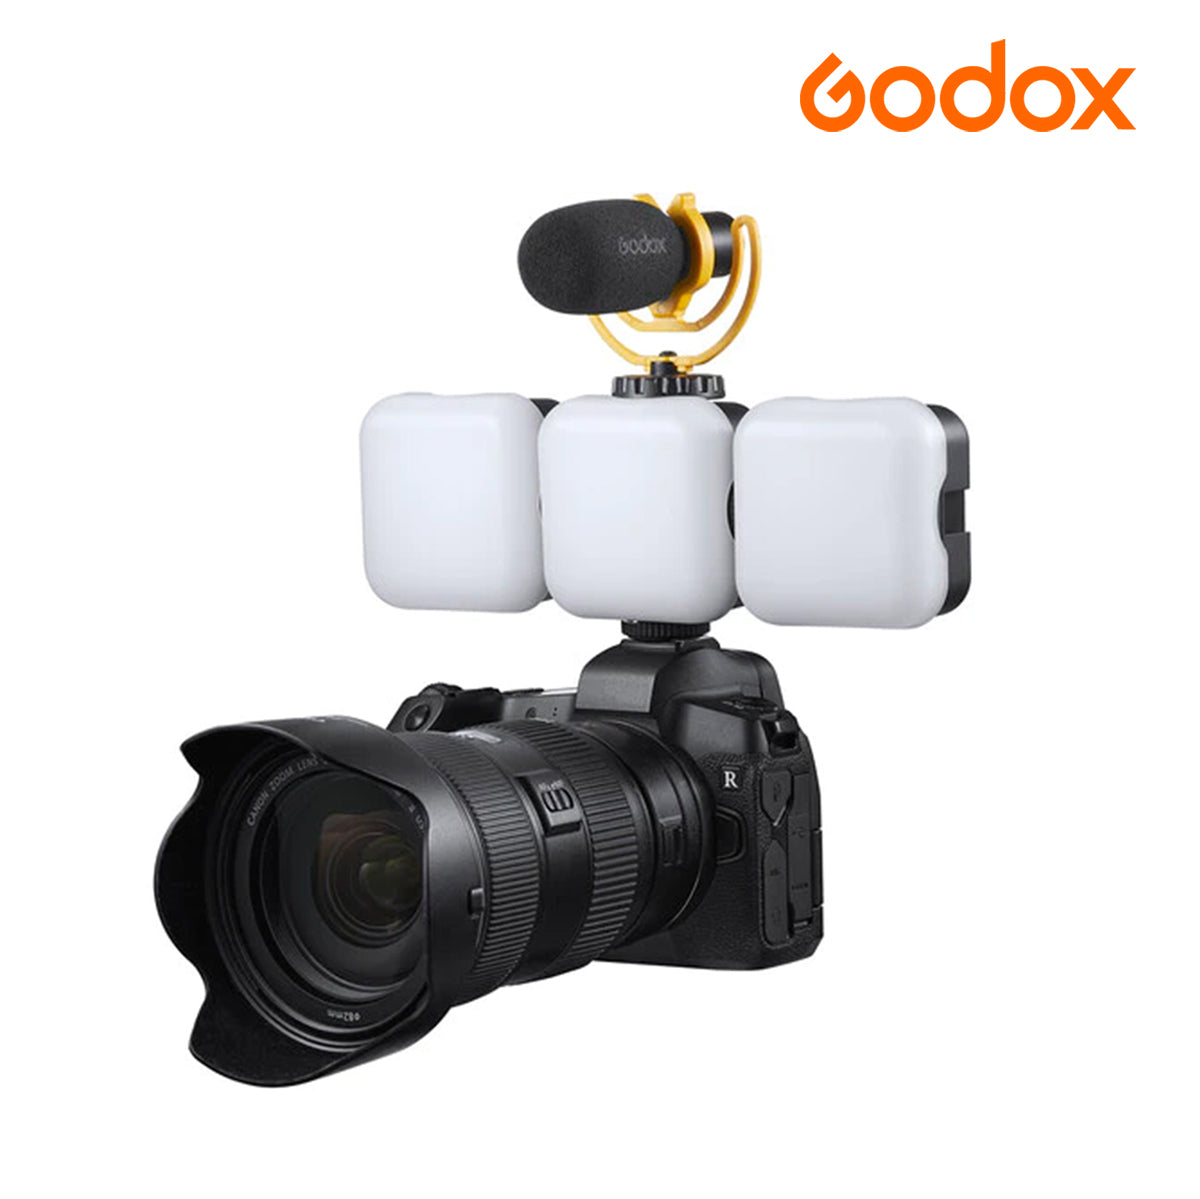 Godox LED6R Litemons RGB Pocket-Size LED Video Light with 1800 mAh built-in Battery